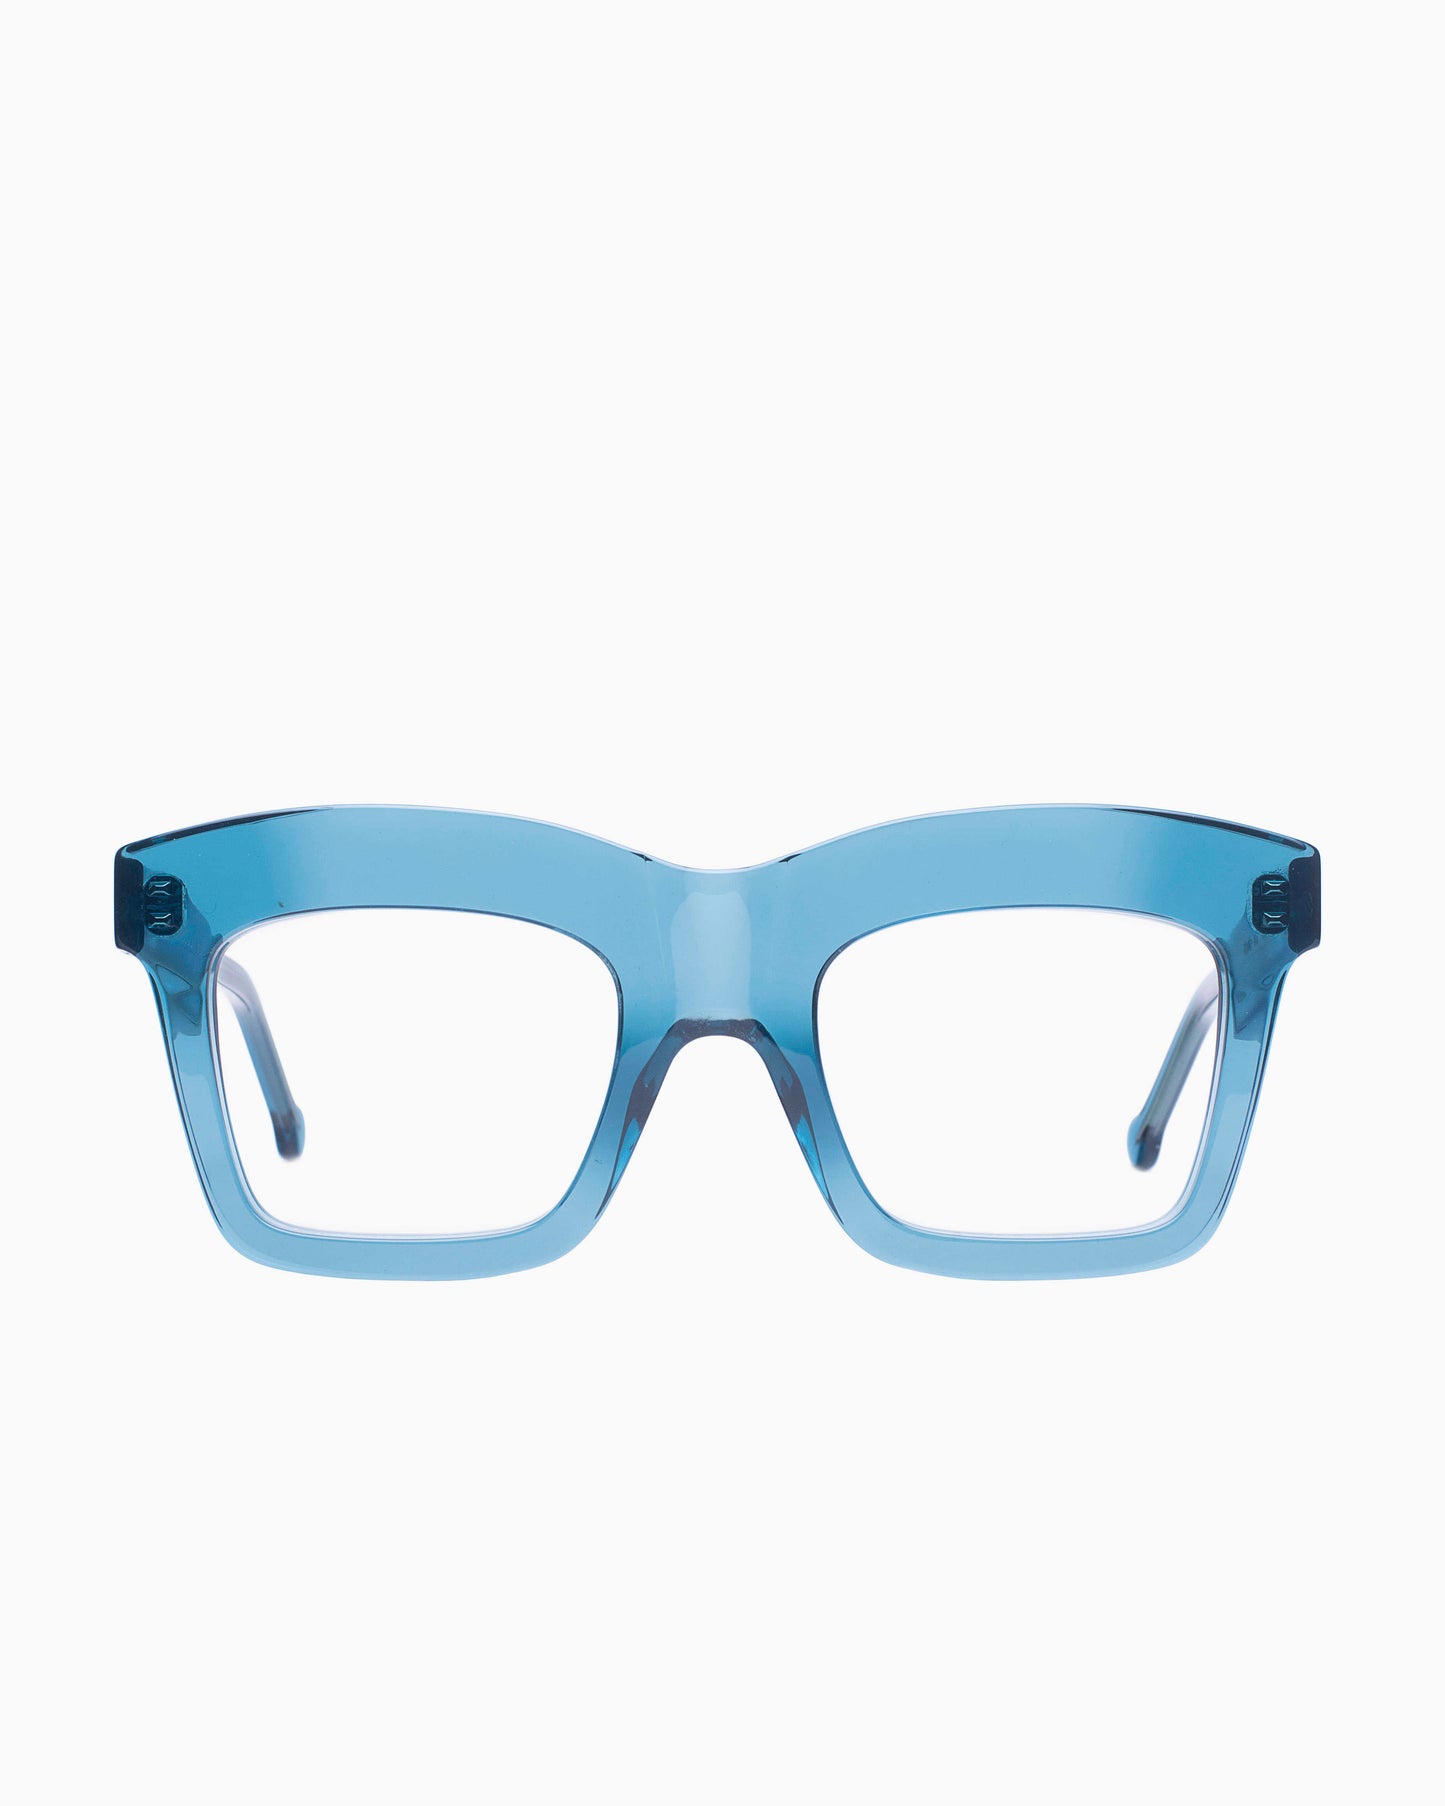 Marie-Sophie Dion - Wonka - Blu | glasses bar